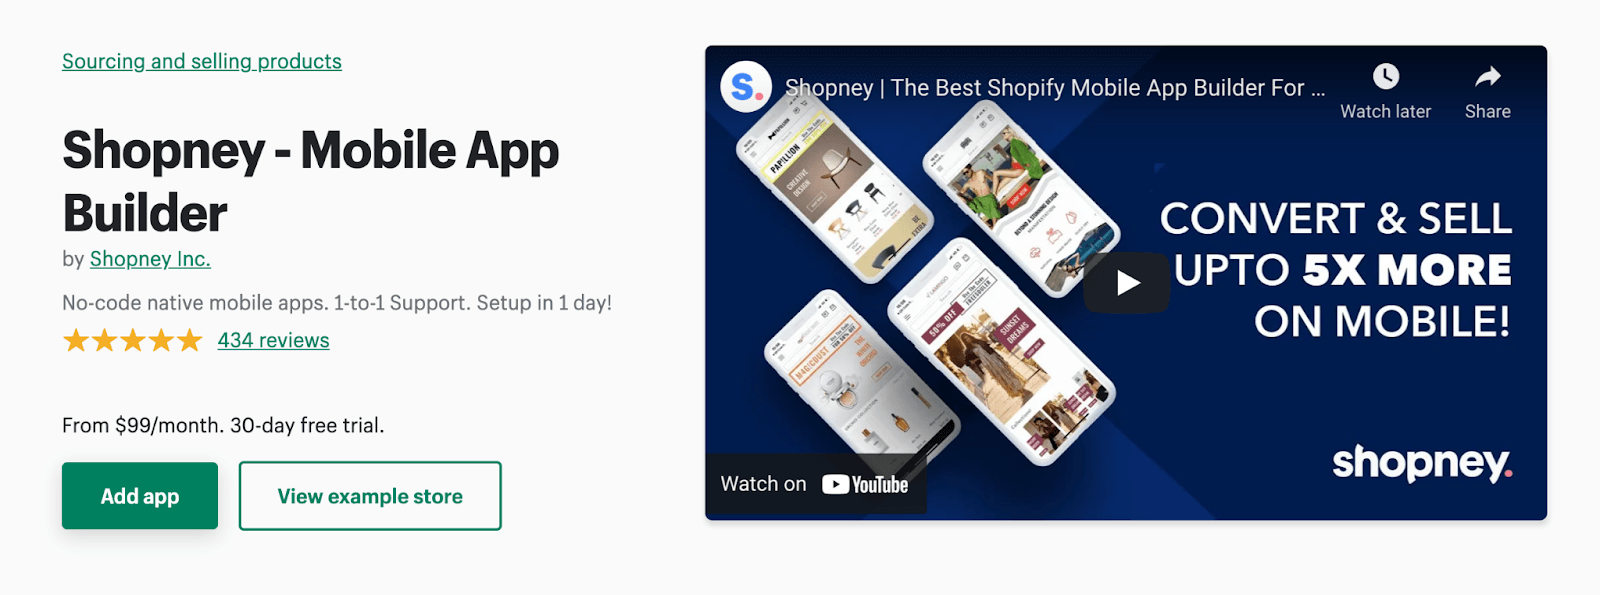 Shopify App Store- Shopney Mobile App Builder-Conversion Rate